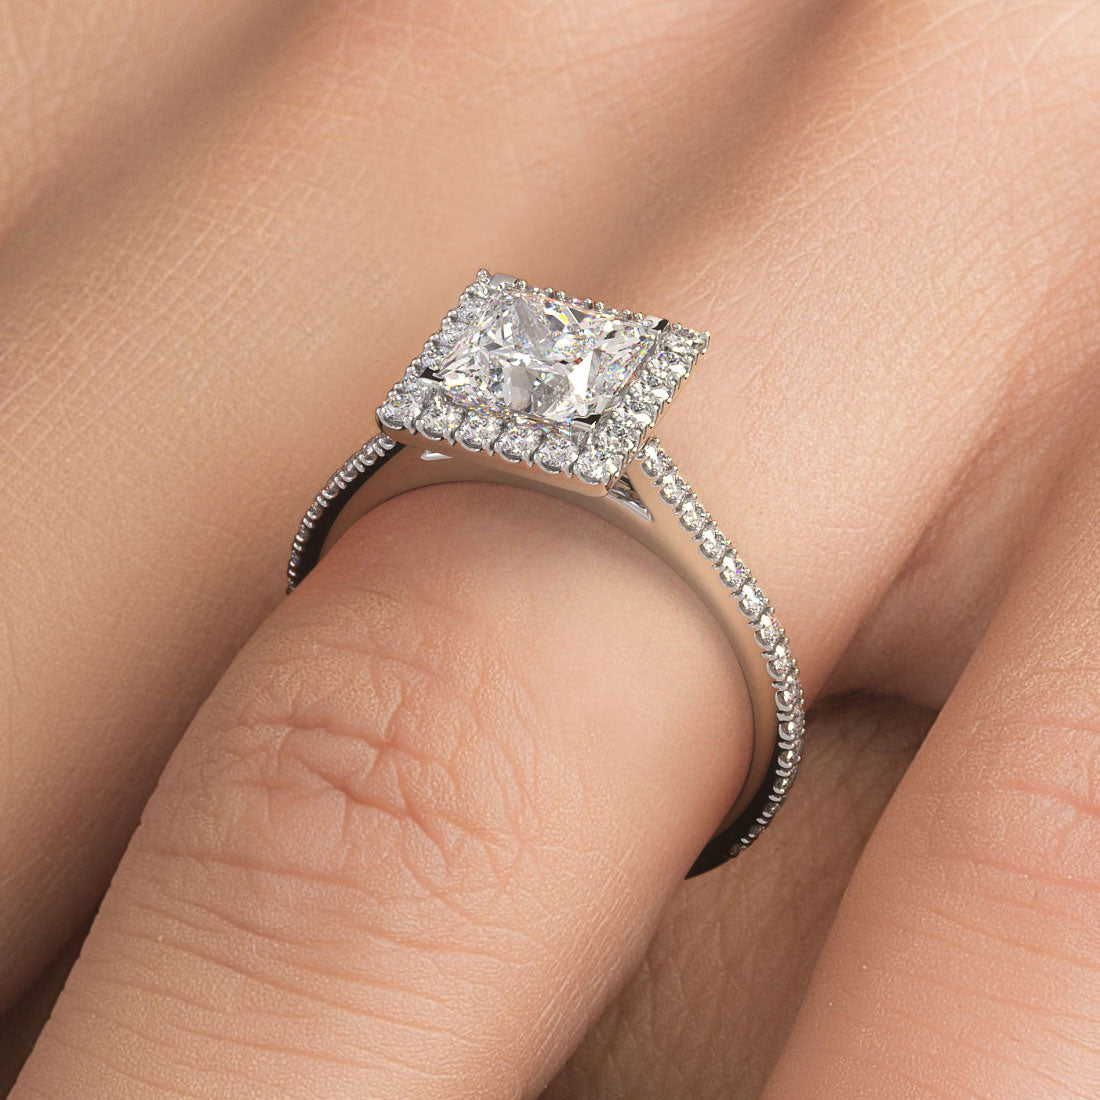 Princess Cut Micropavé Halo Diamond Engagement Ring Setting